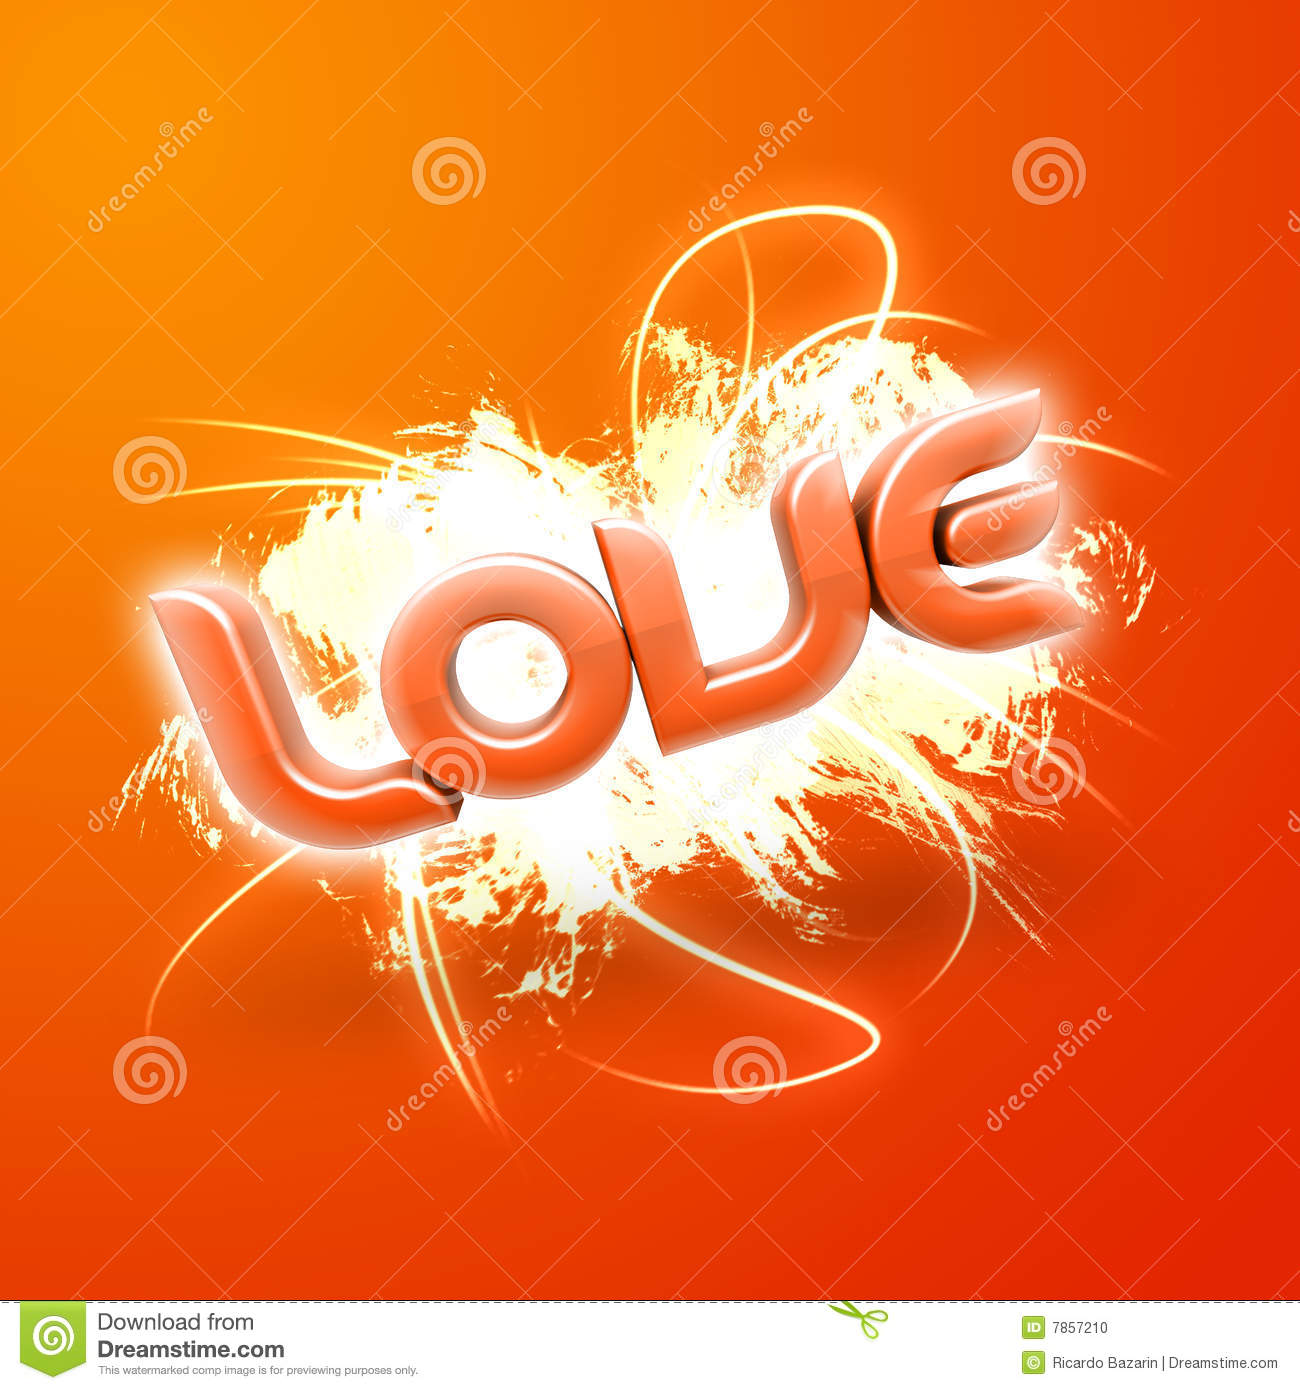 3d Illustration Of The Word Love Orange Stock Photo   Image  7857210